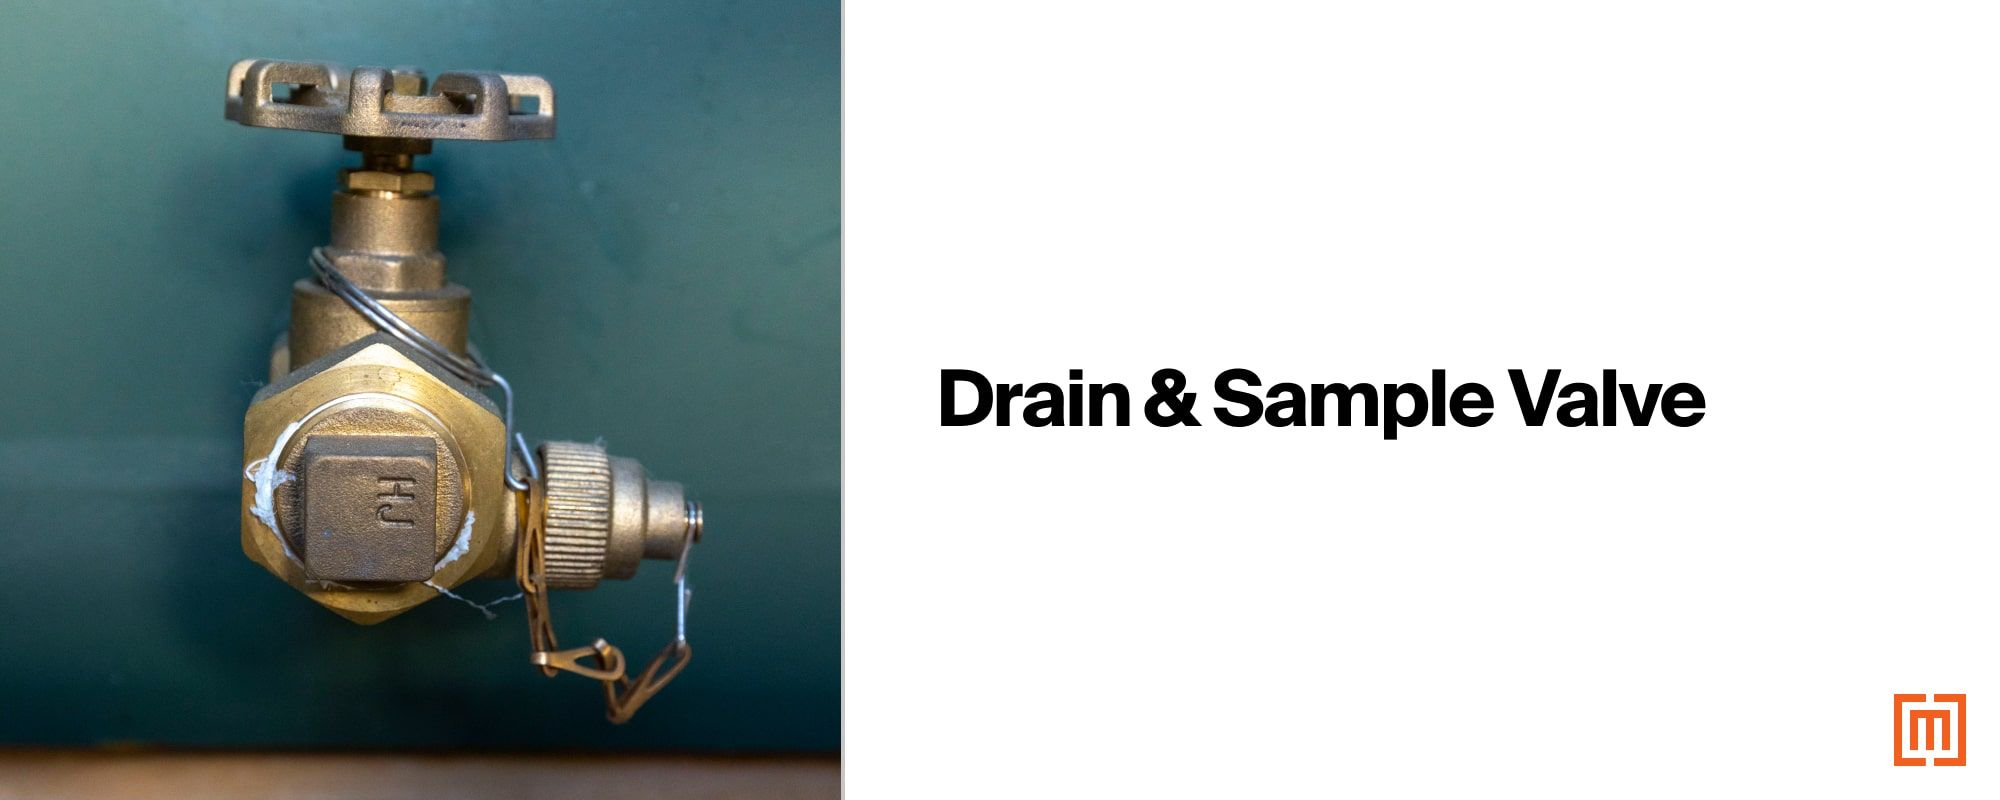 Maddox padmount transformer drain and sample valve